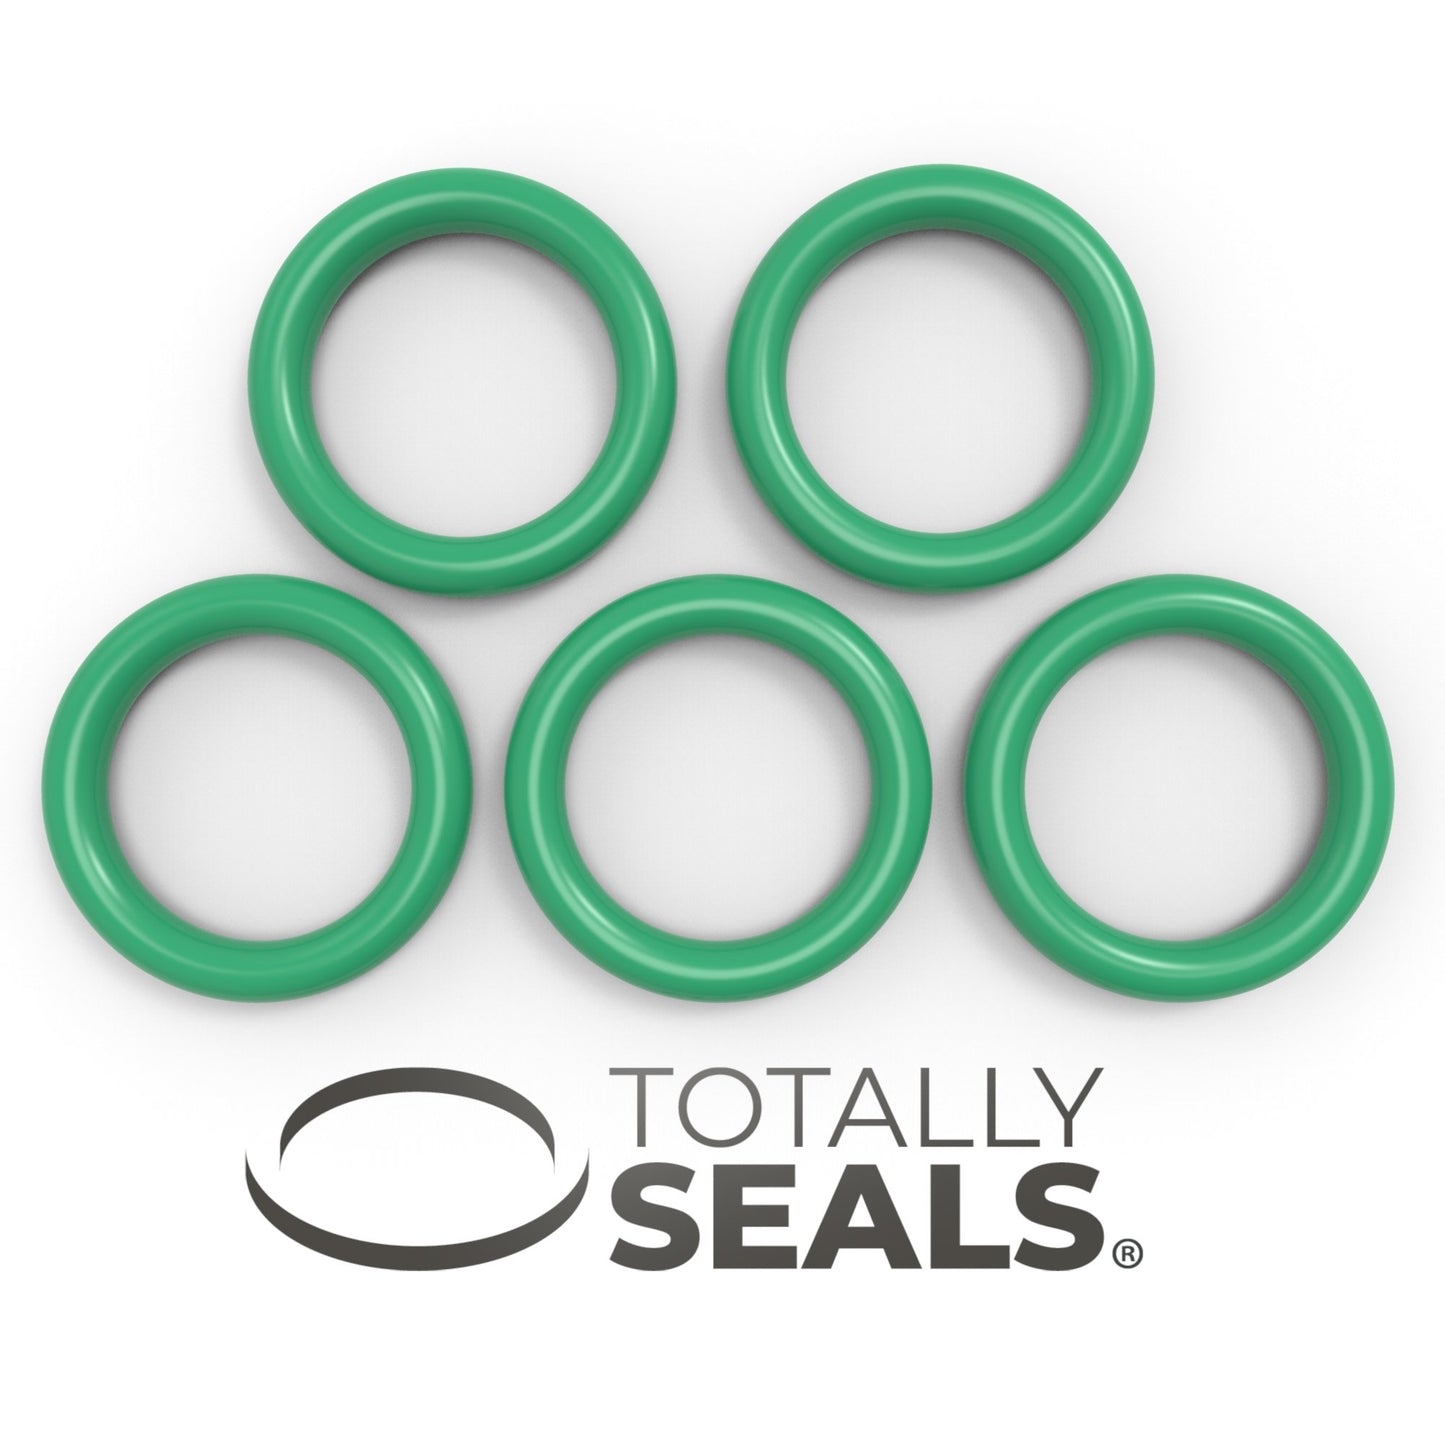 17mm x 3mm (23mm OD) FKM (Viton™) O-Rings - Totally Seals®